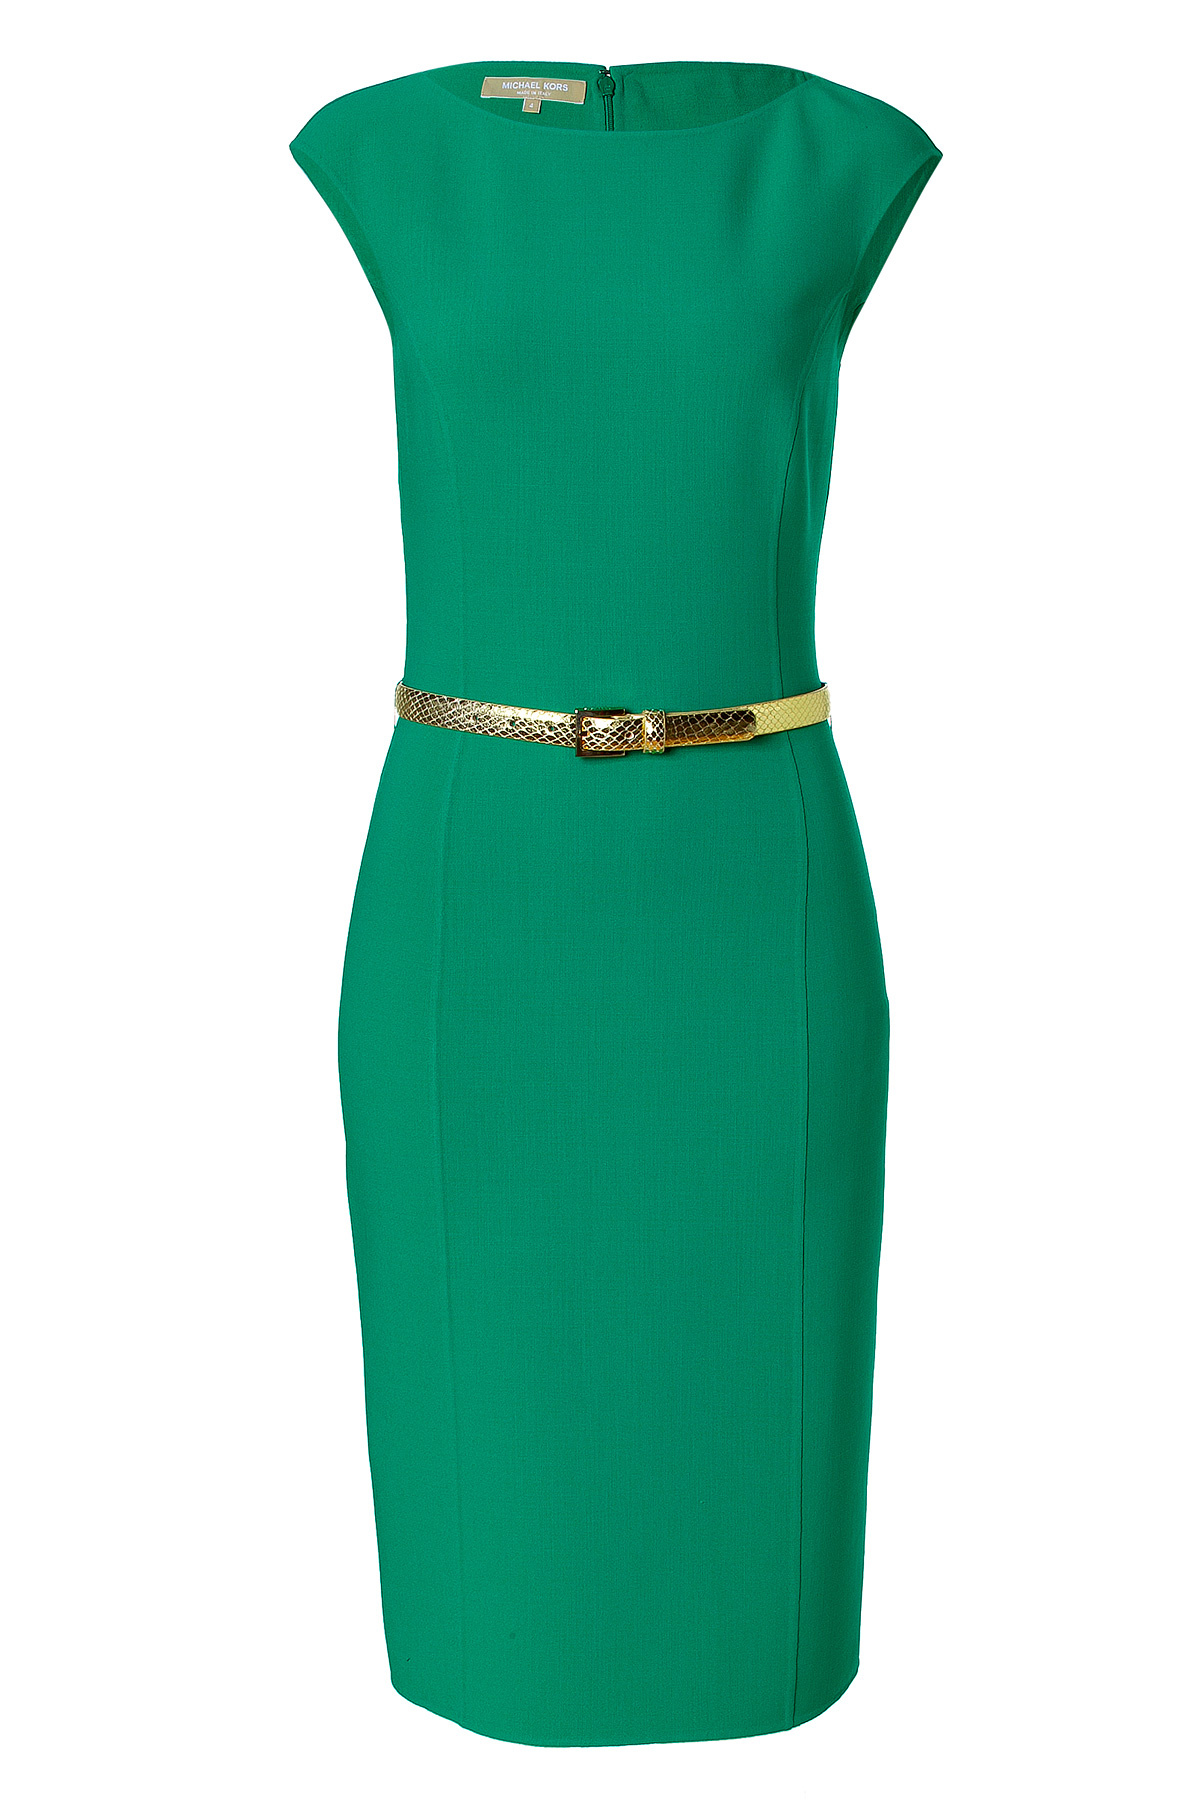 Lyst - Michael kors Emerald Belted Wool Blend Sheath Dress in Green